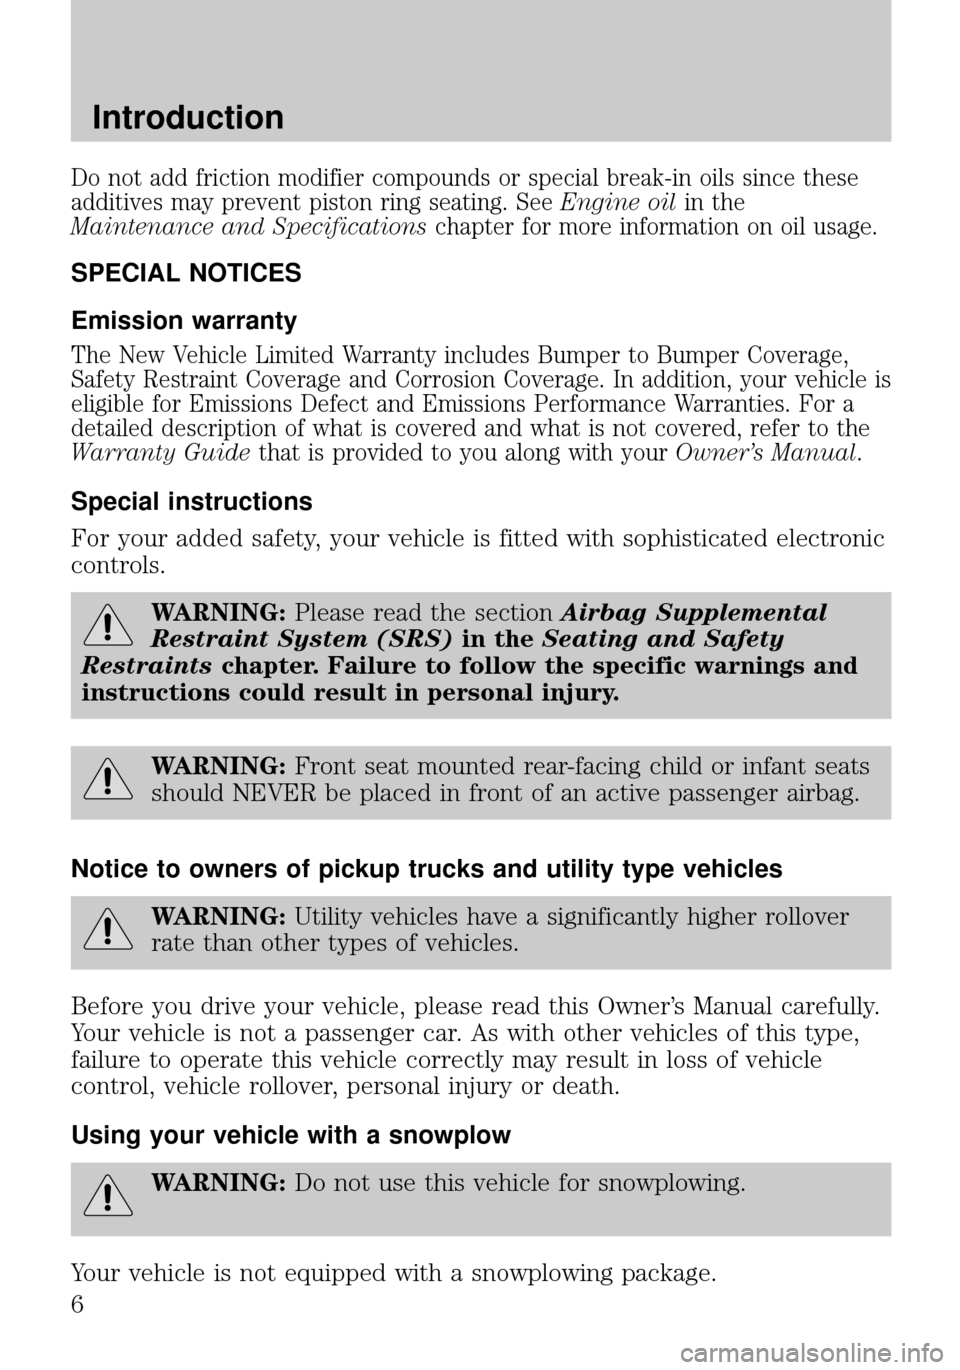 MAZDA MODEL TRIBUTE 2010  Owners Manual (in English) 